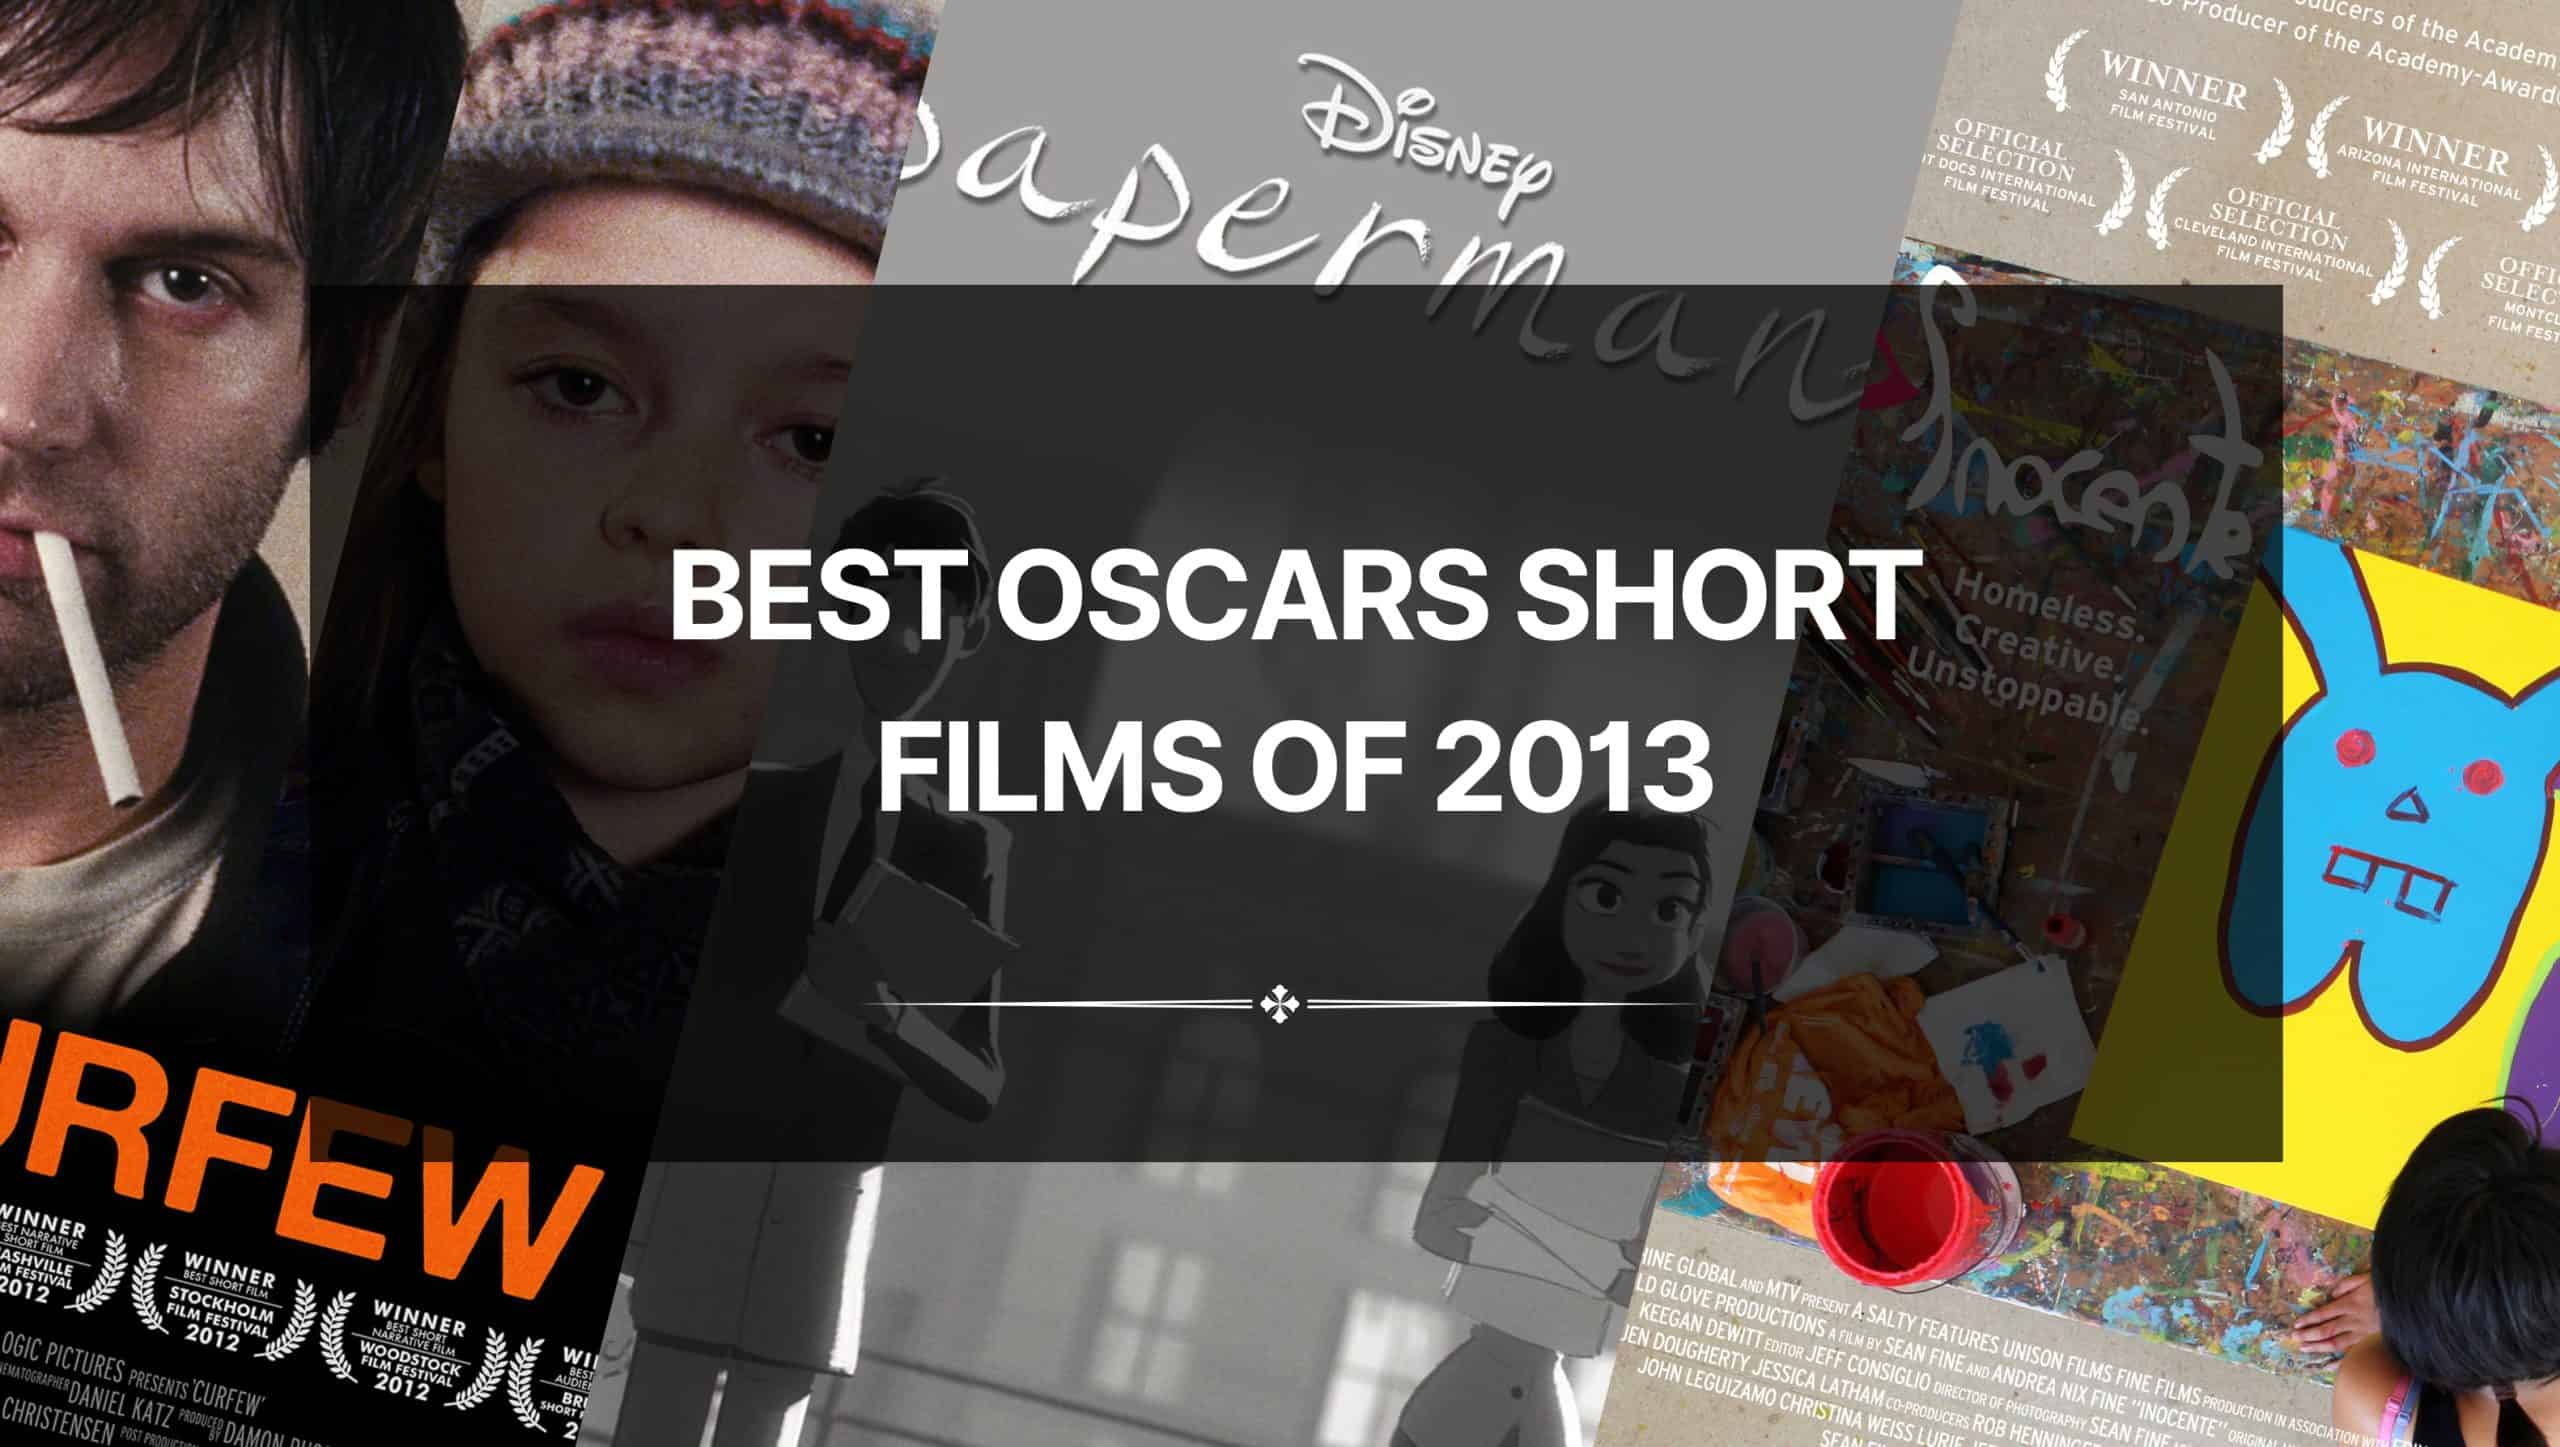 Best Oscars Short Films of 2013